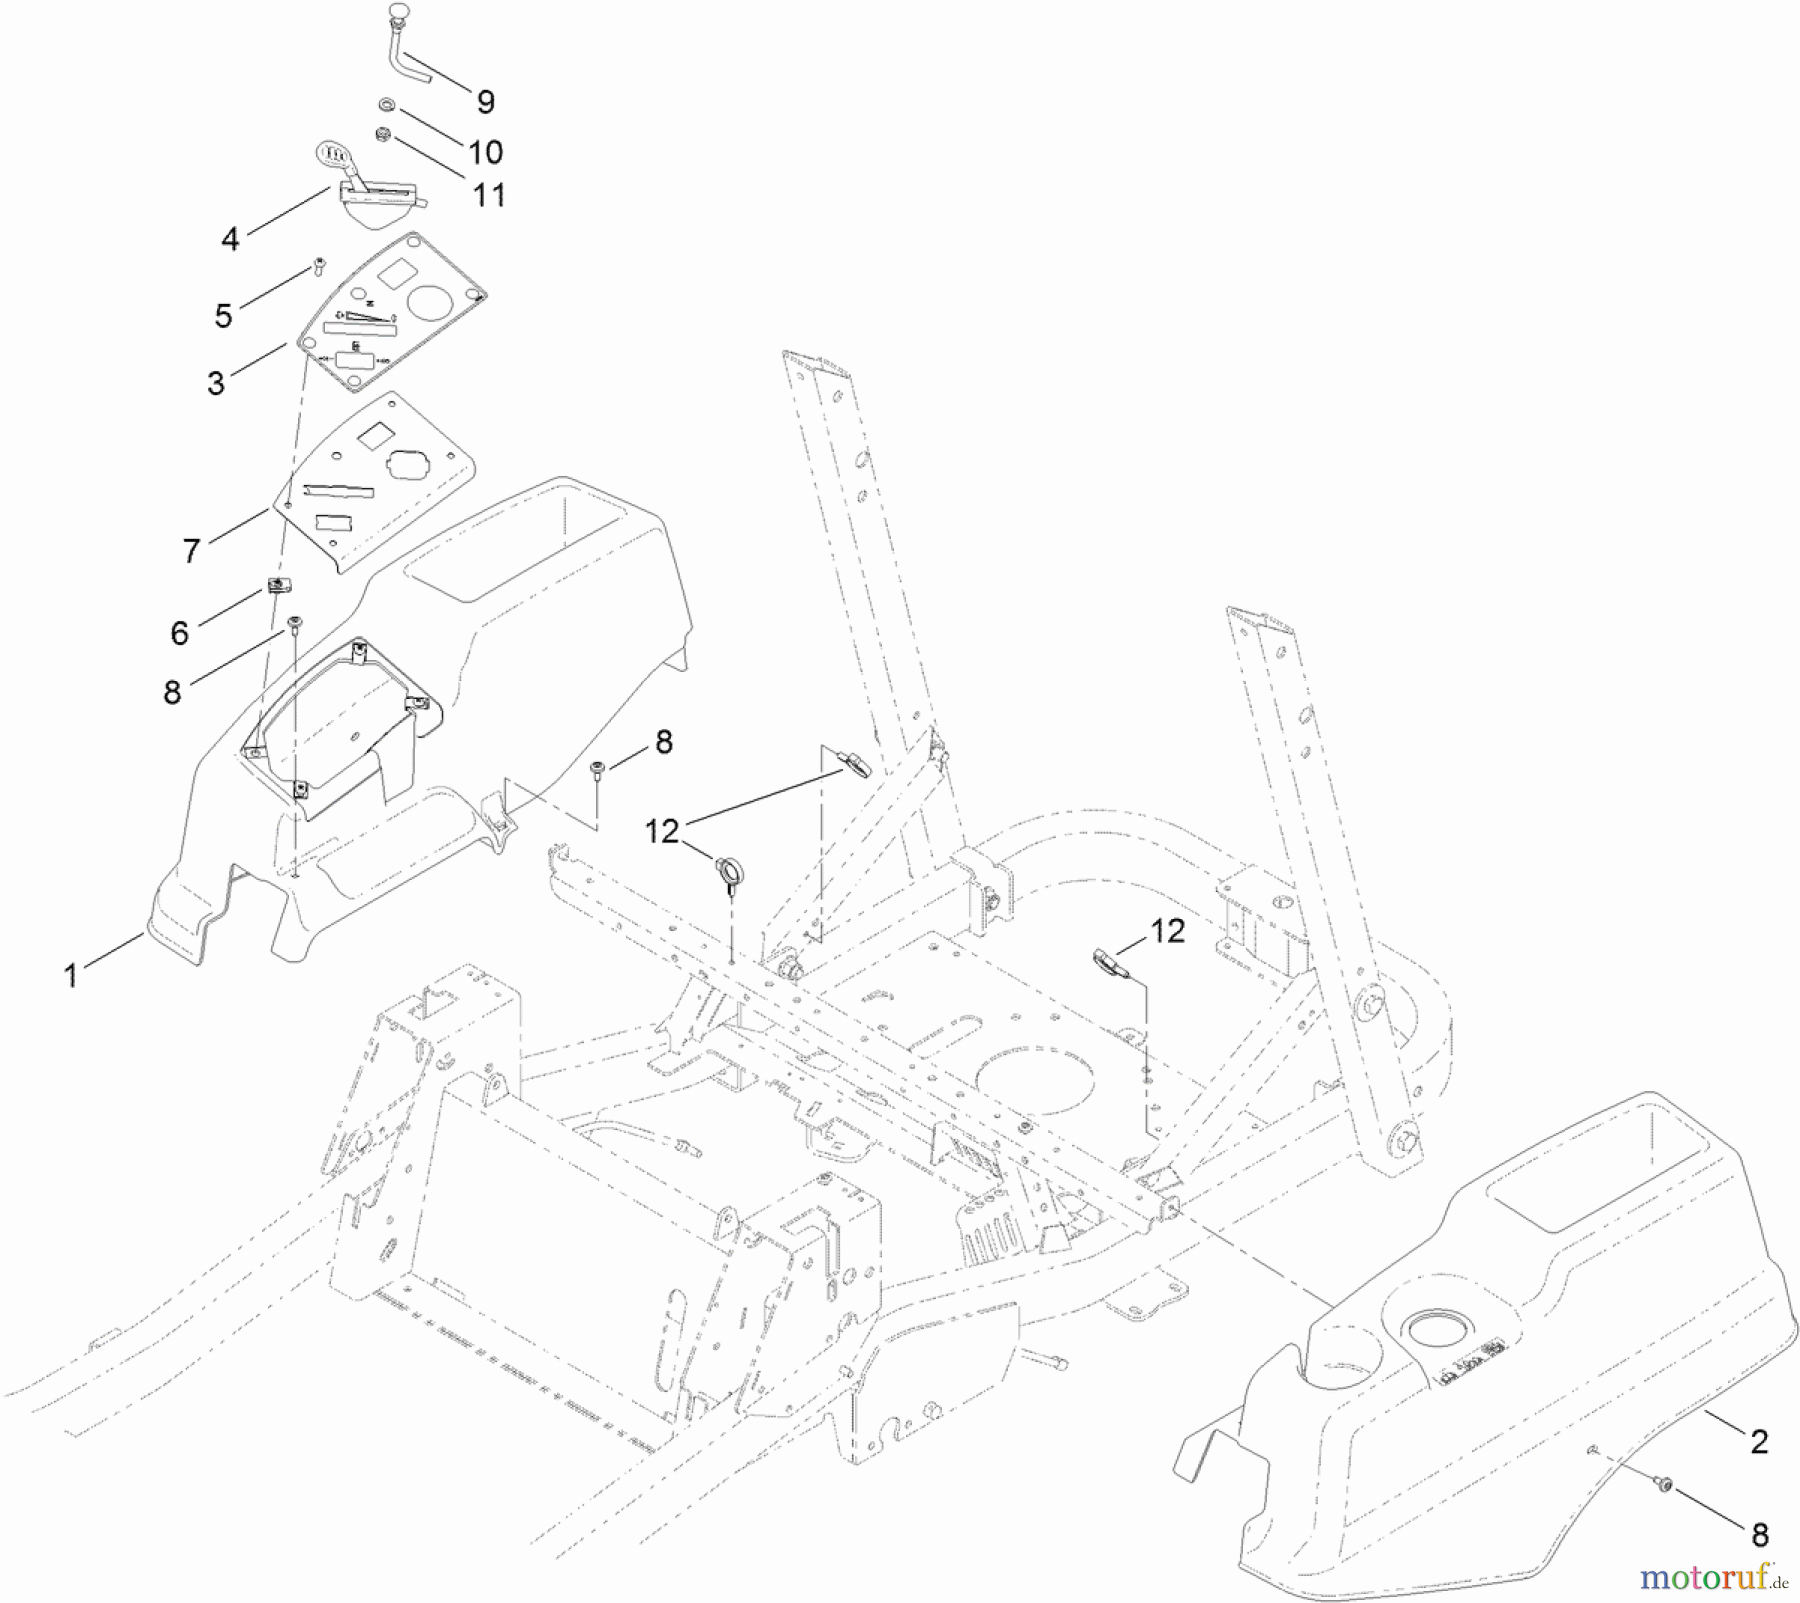  Toro Neu Mowers, Zero-Turn 74845 (ZX4820) - Toro TITAN ZX4820 Zero-Turn-Radius Riding Mower, 2012 (SN 312000001-312999999) CONTROL PANEL AND BODY STYLING POD ASSEMBLY